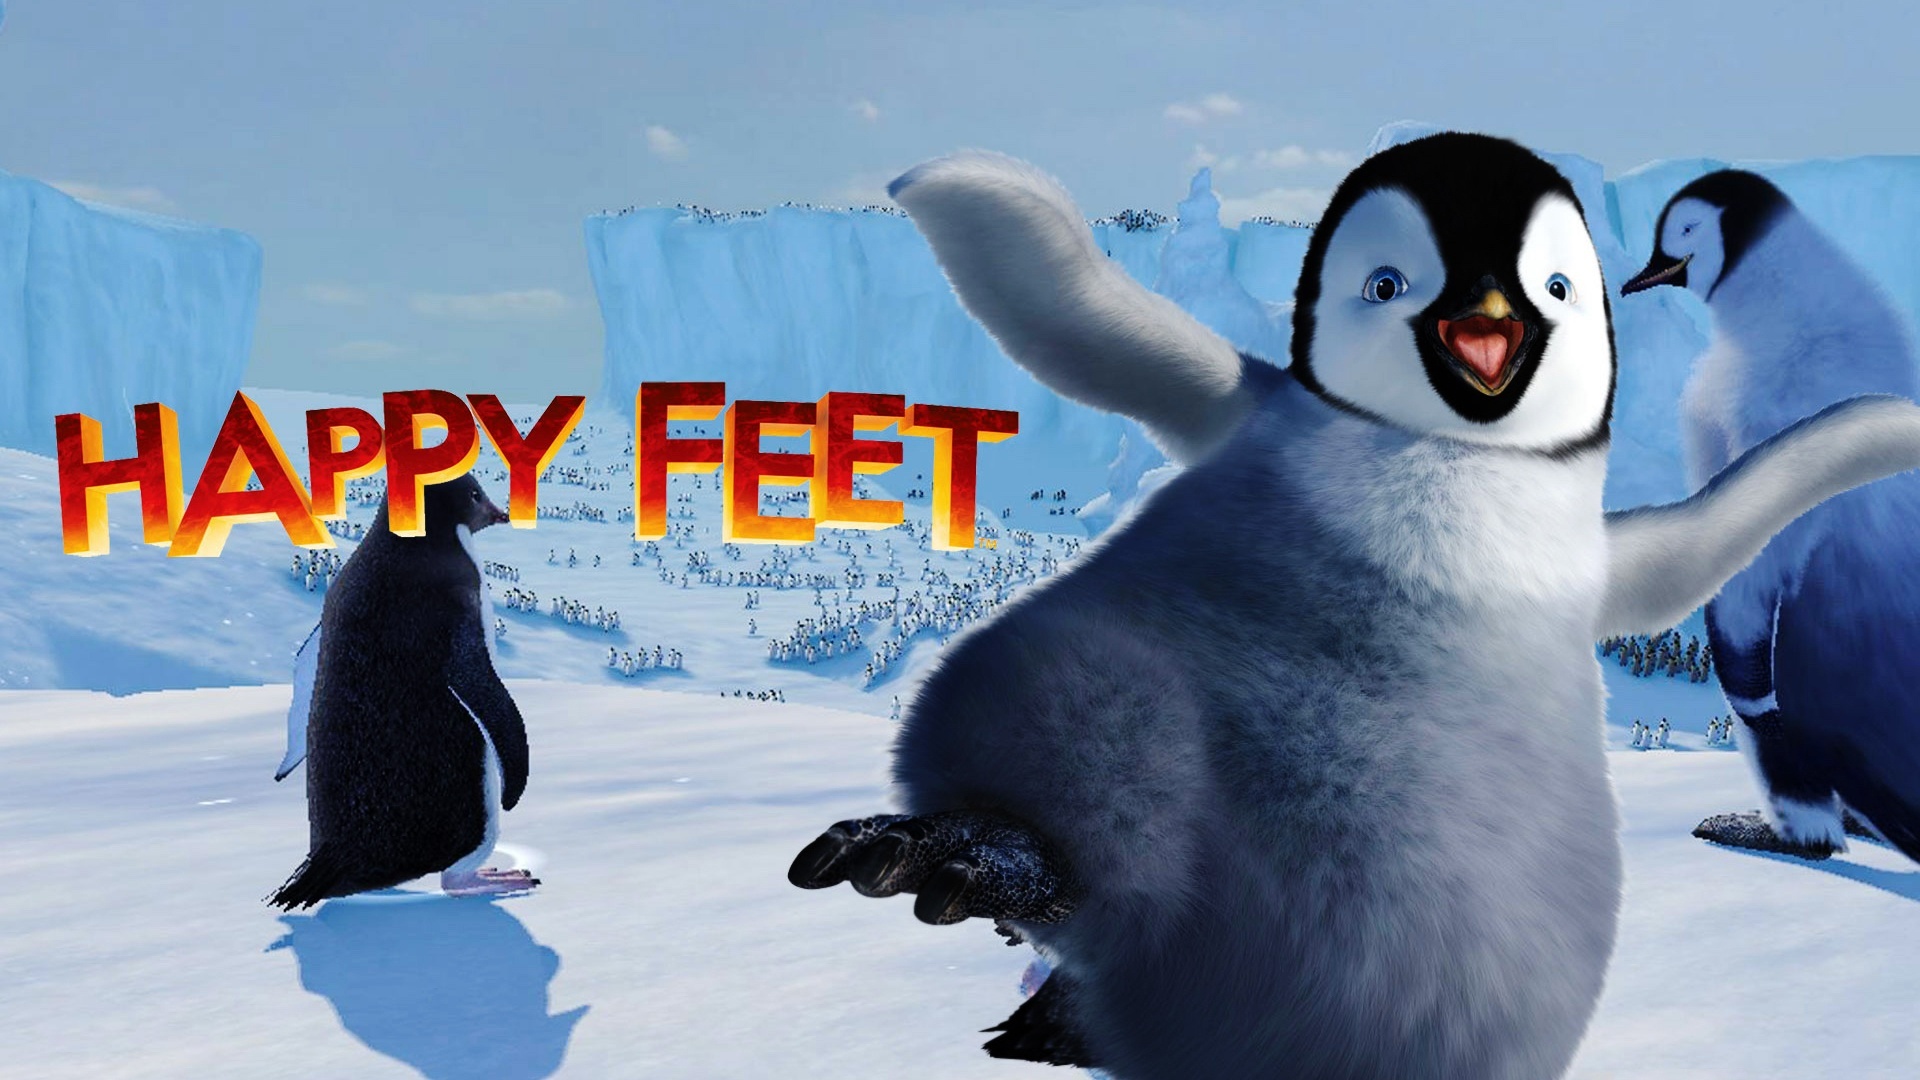 Happy Feet, Online movie streaming, HD quality, Stan platform, 1920x1080 Full HD Desktop